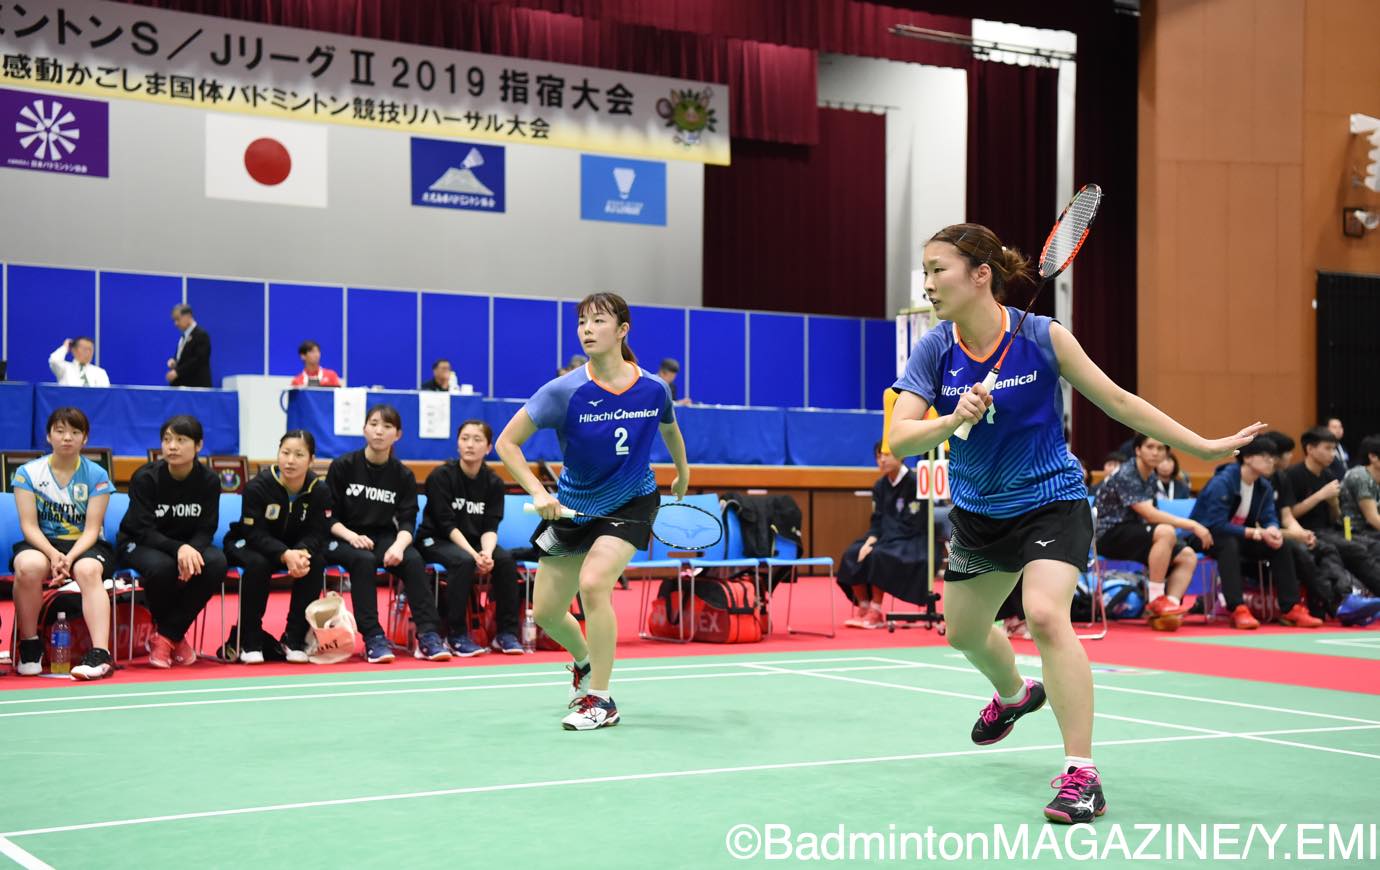 S Jリーグ 19 日立化成が全勝対決を制して優勝 S Jリーグに返り咲く 女子 バドスピ Badminton Spirit